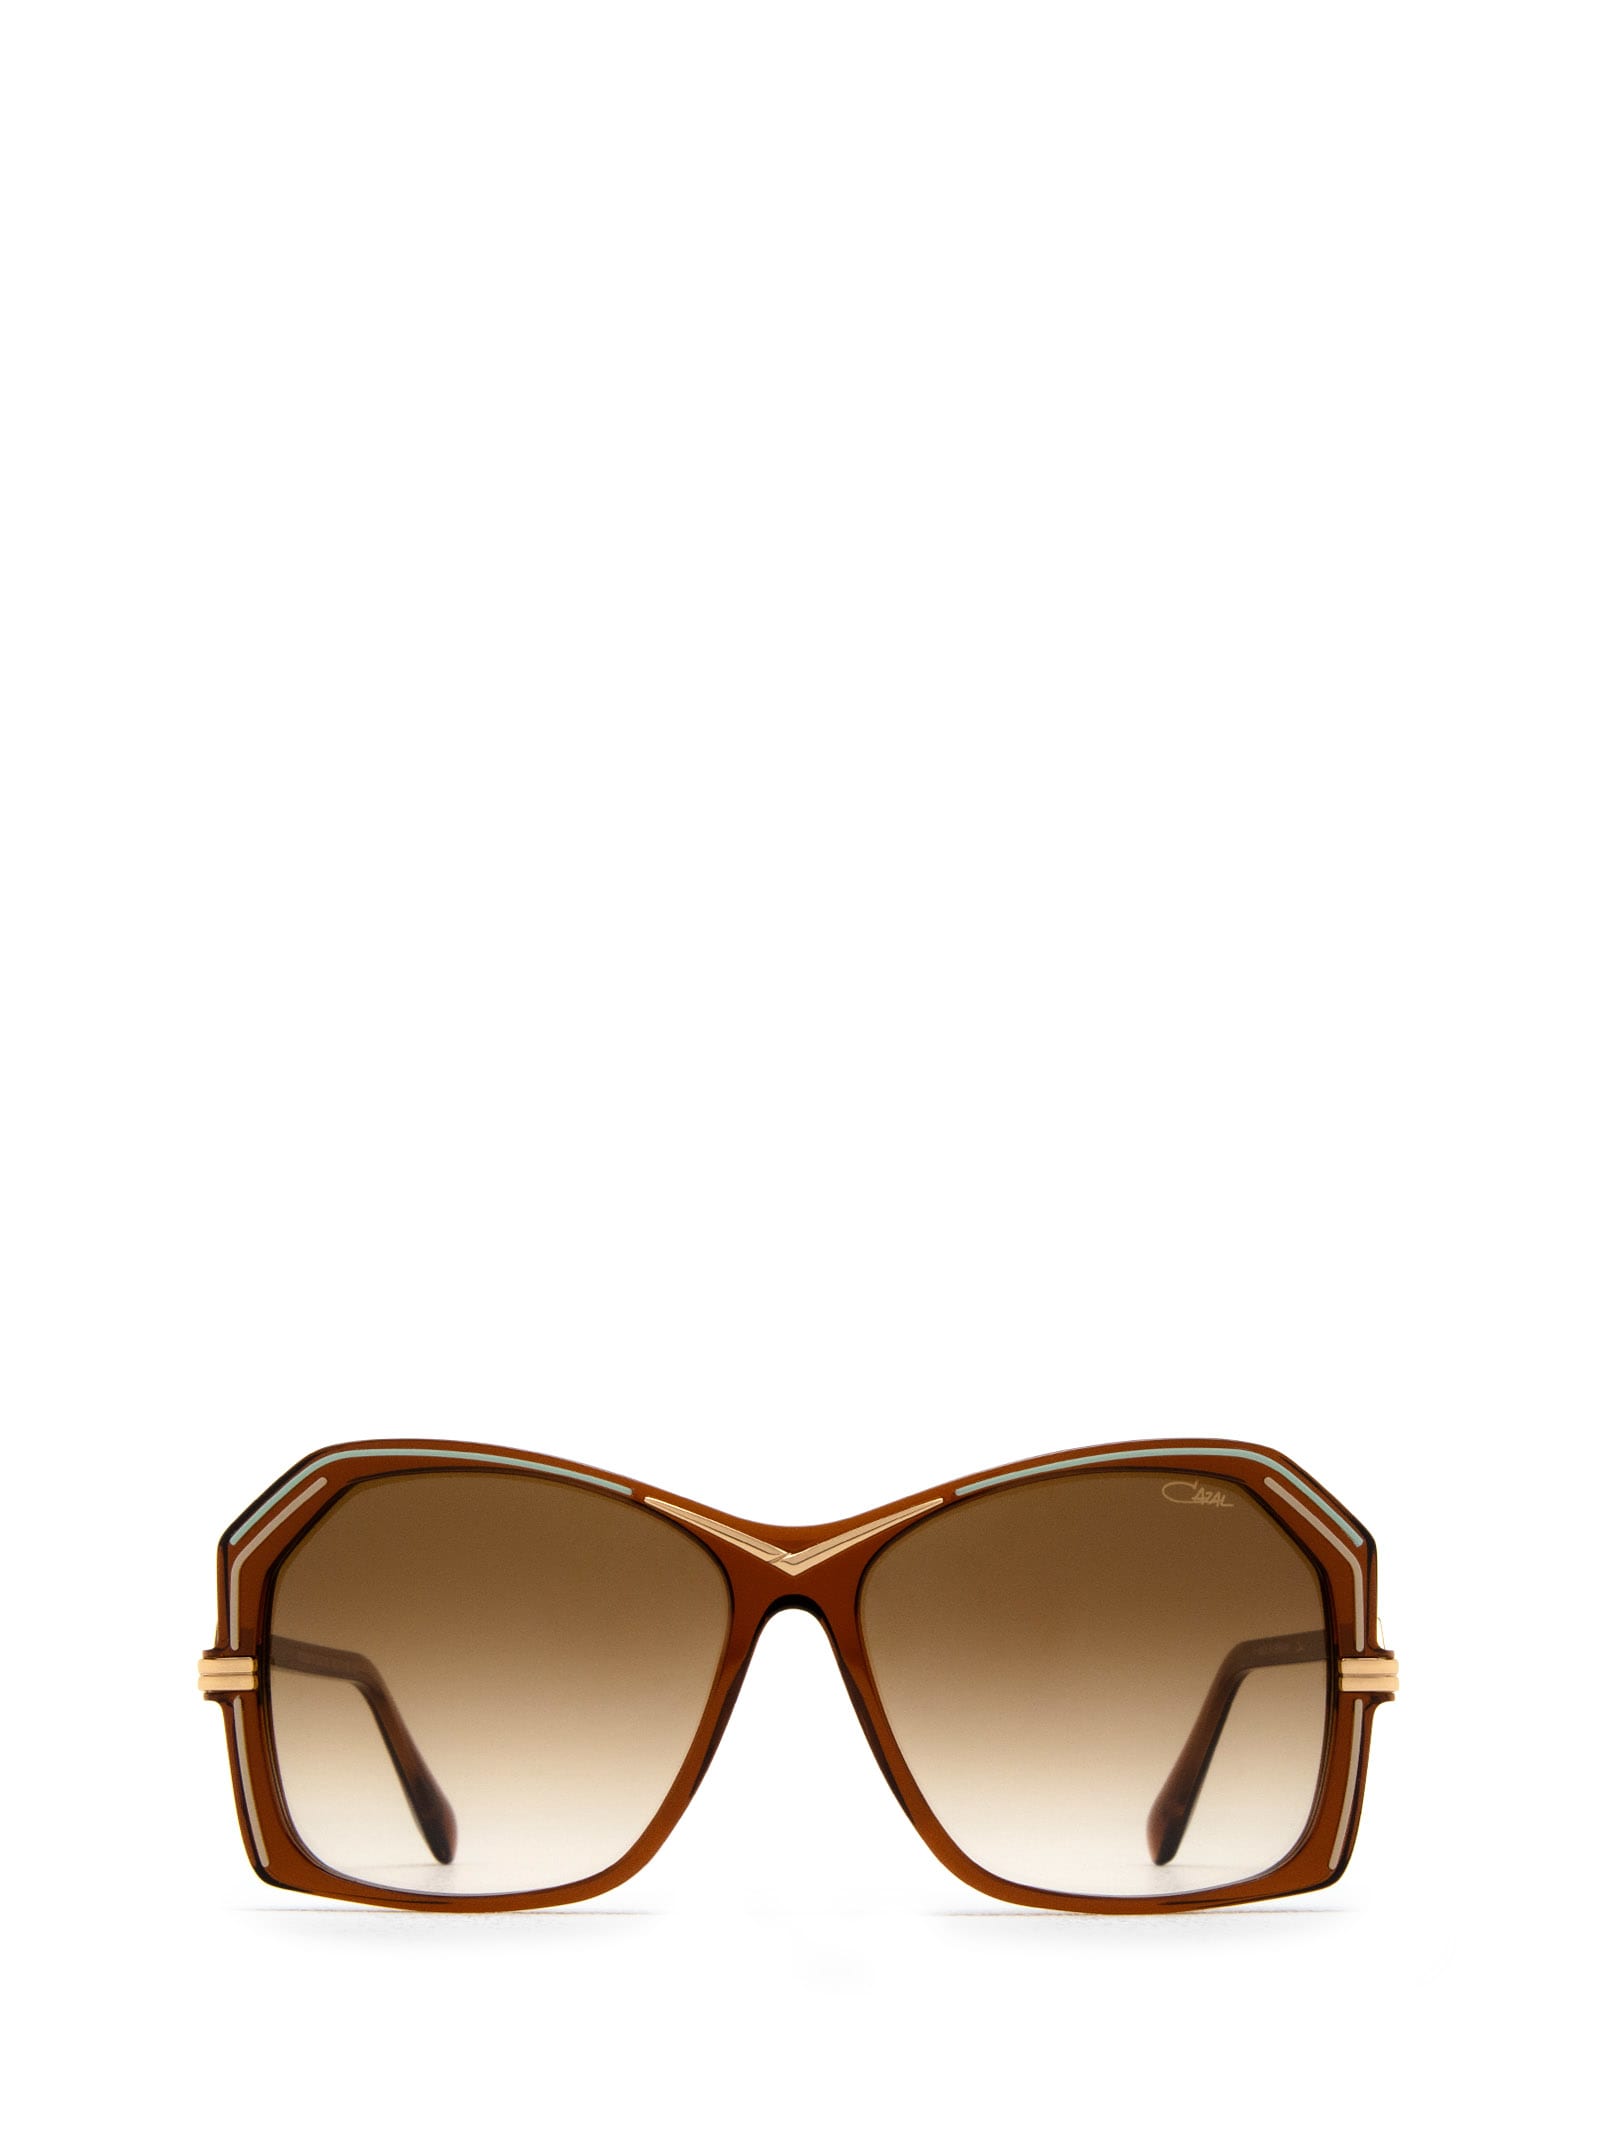 Cazal 8510 Brown - Turquoise Sunglasses